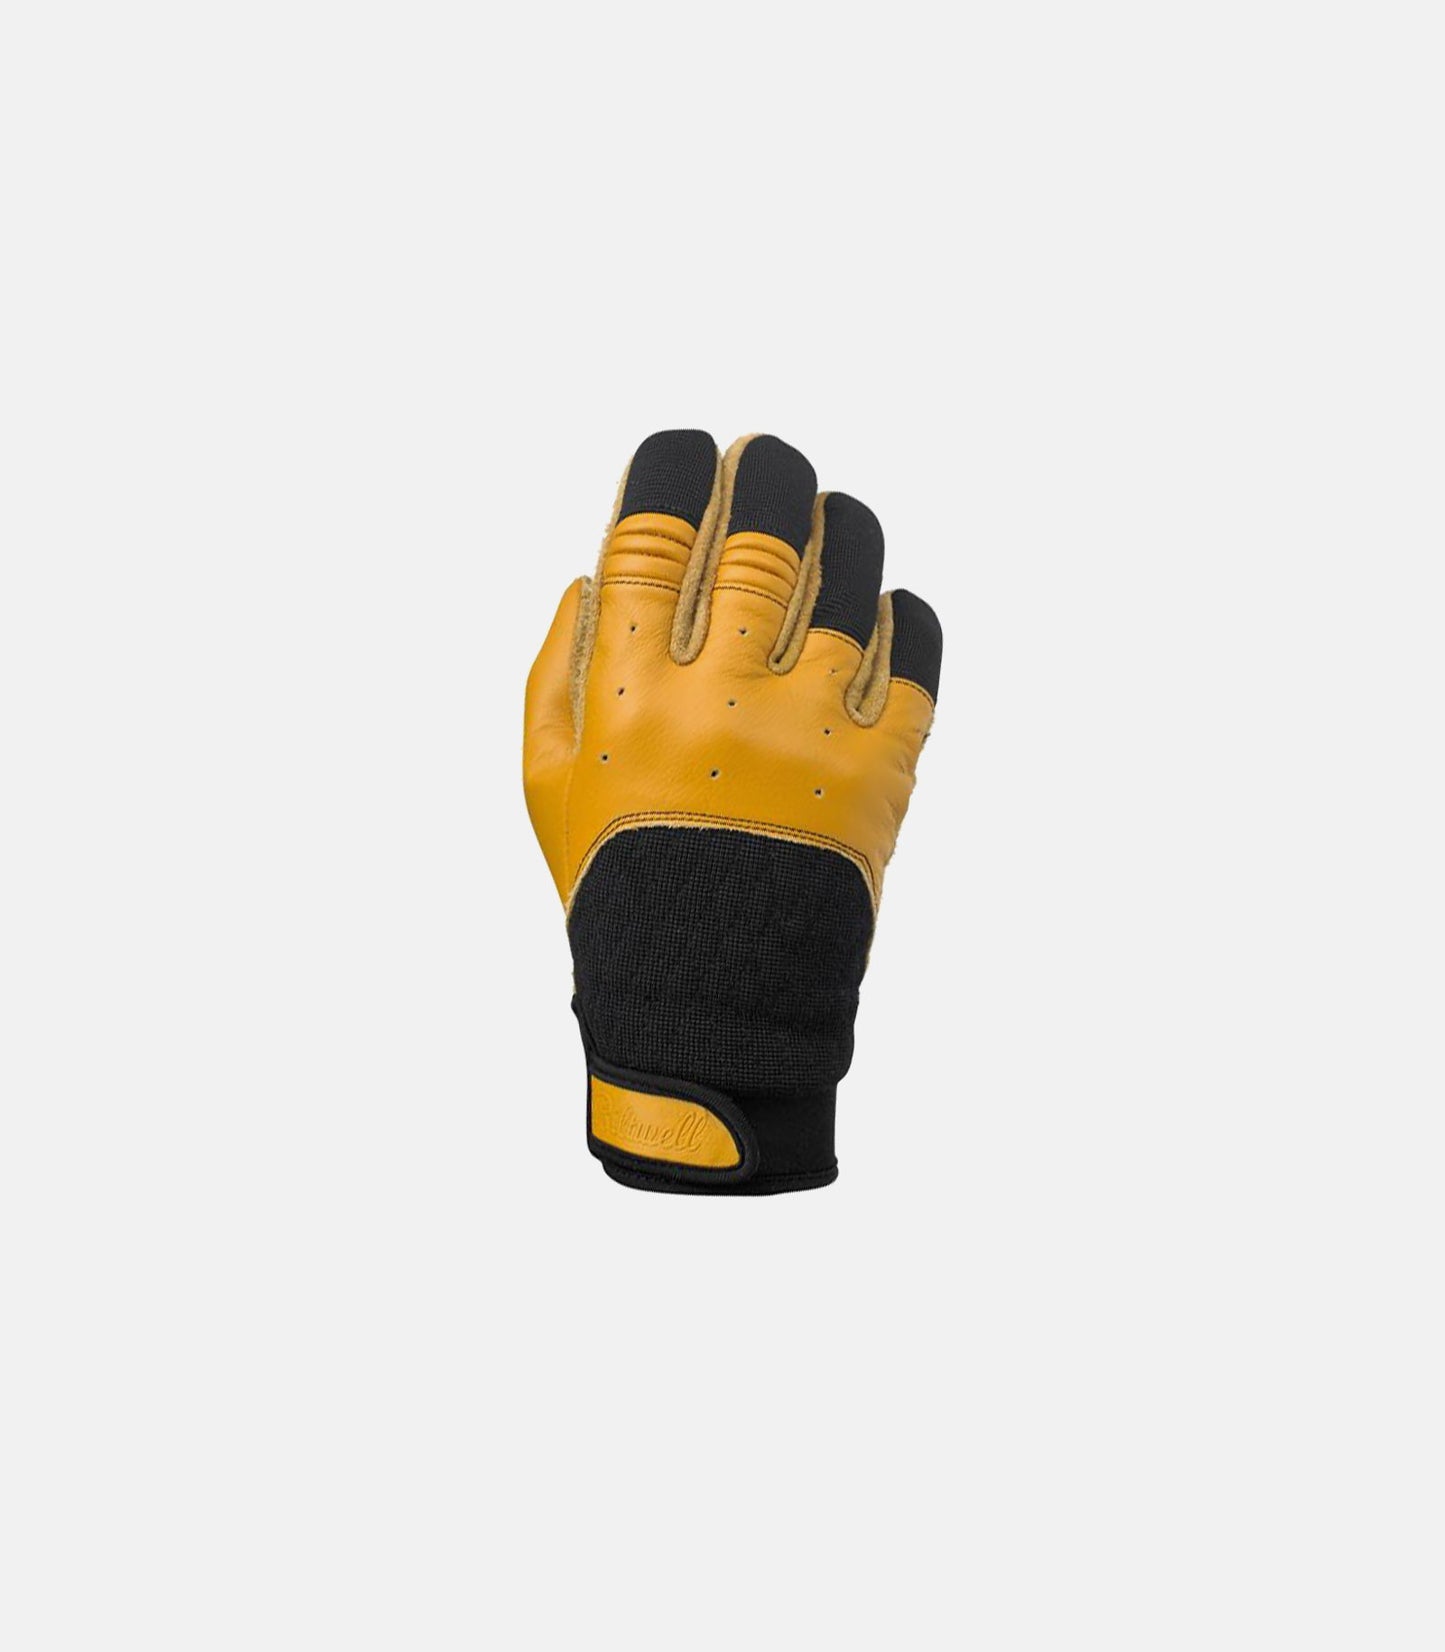 BILTWELL Bantam Gloves - Tan/Black